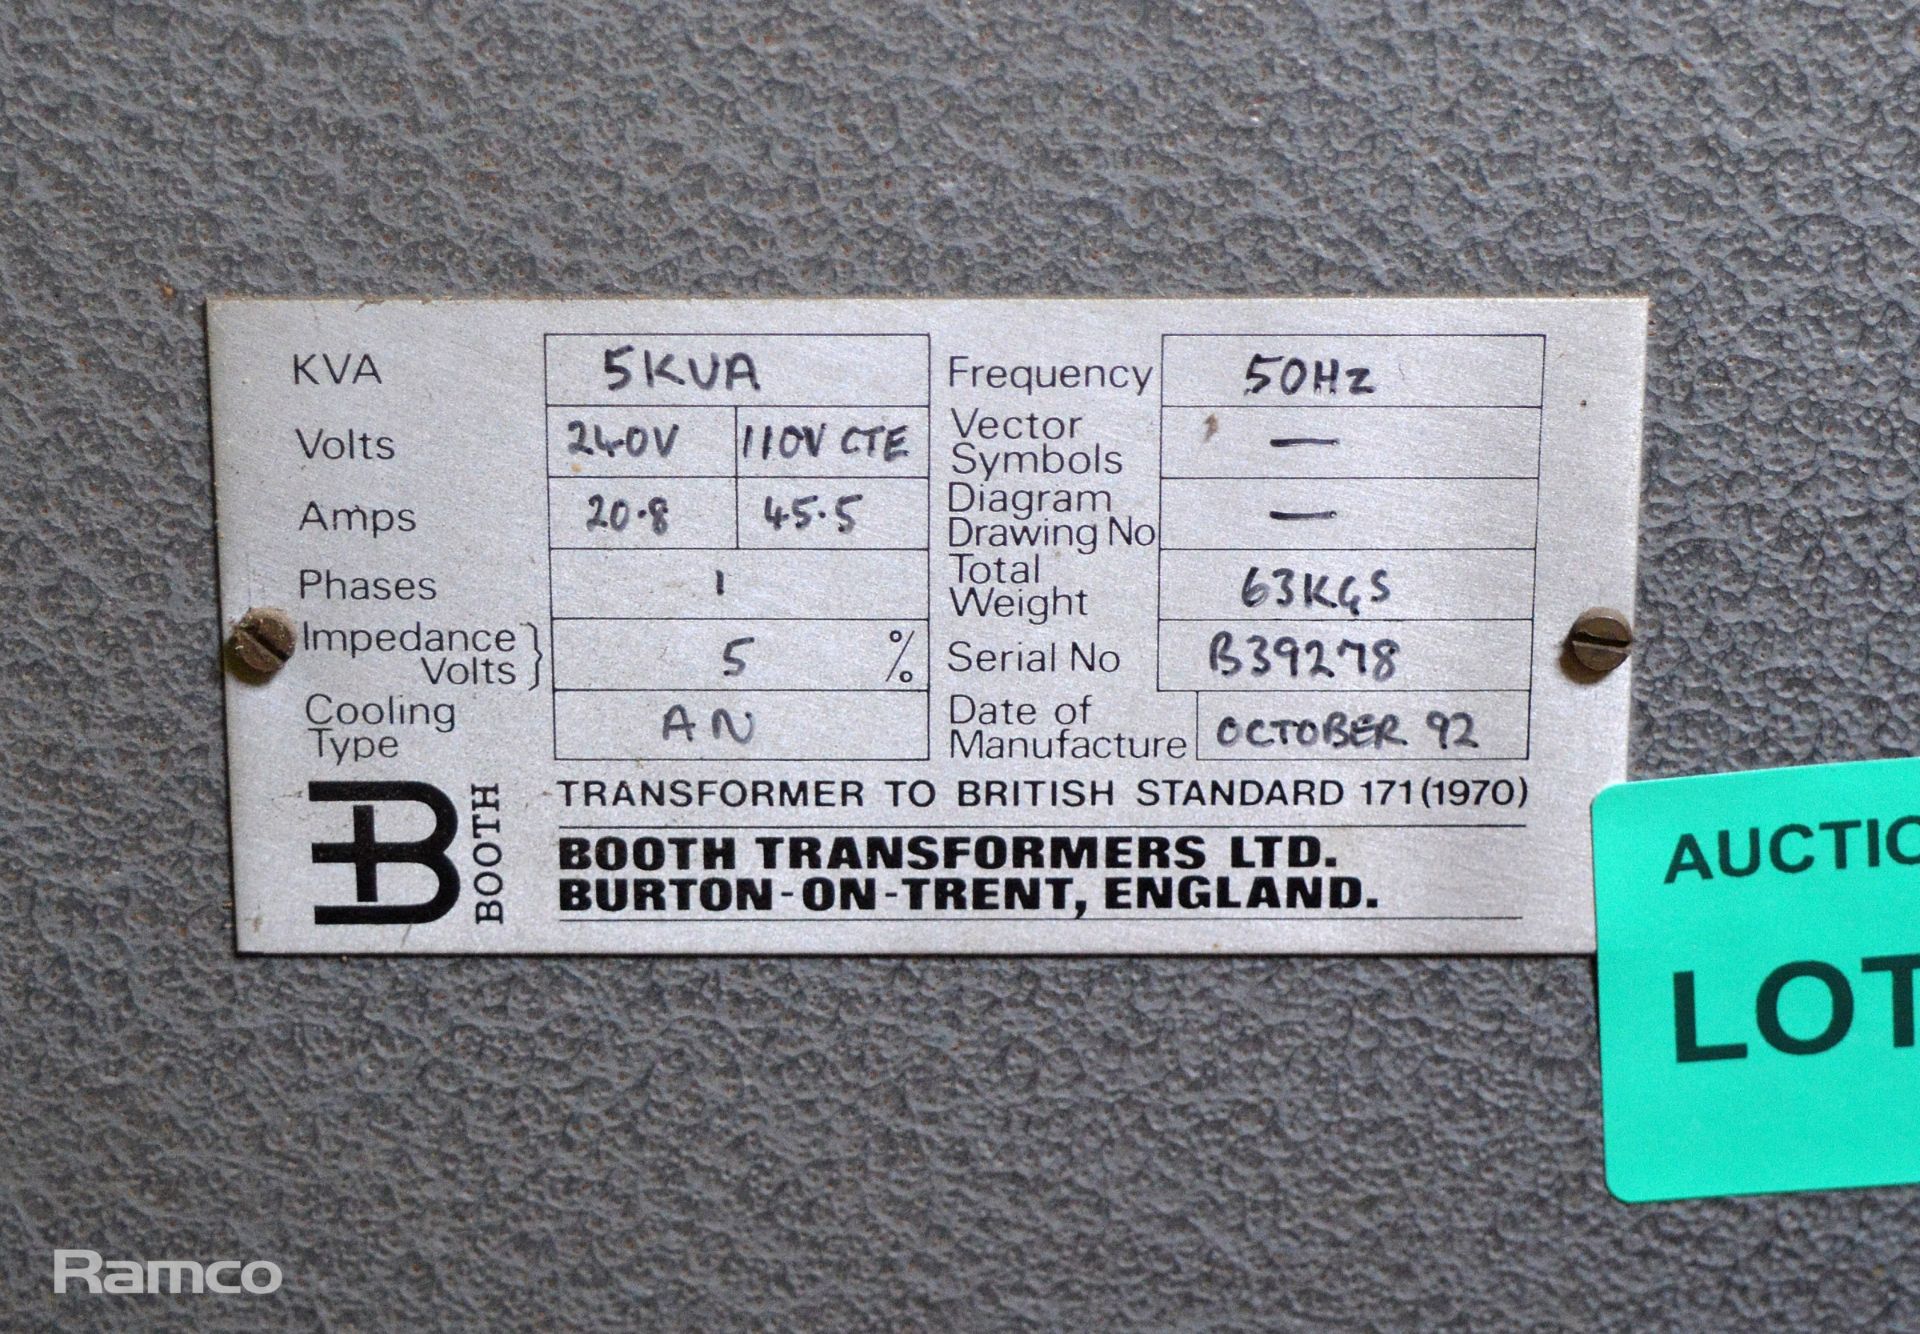 Booth Transformers Ltd 5KVA - 240V - 110V CTE - 20.8A - 45.5A - Image 2 of 3